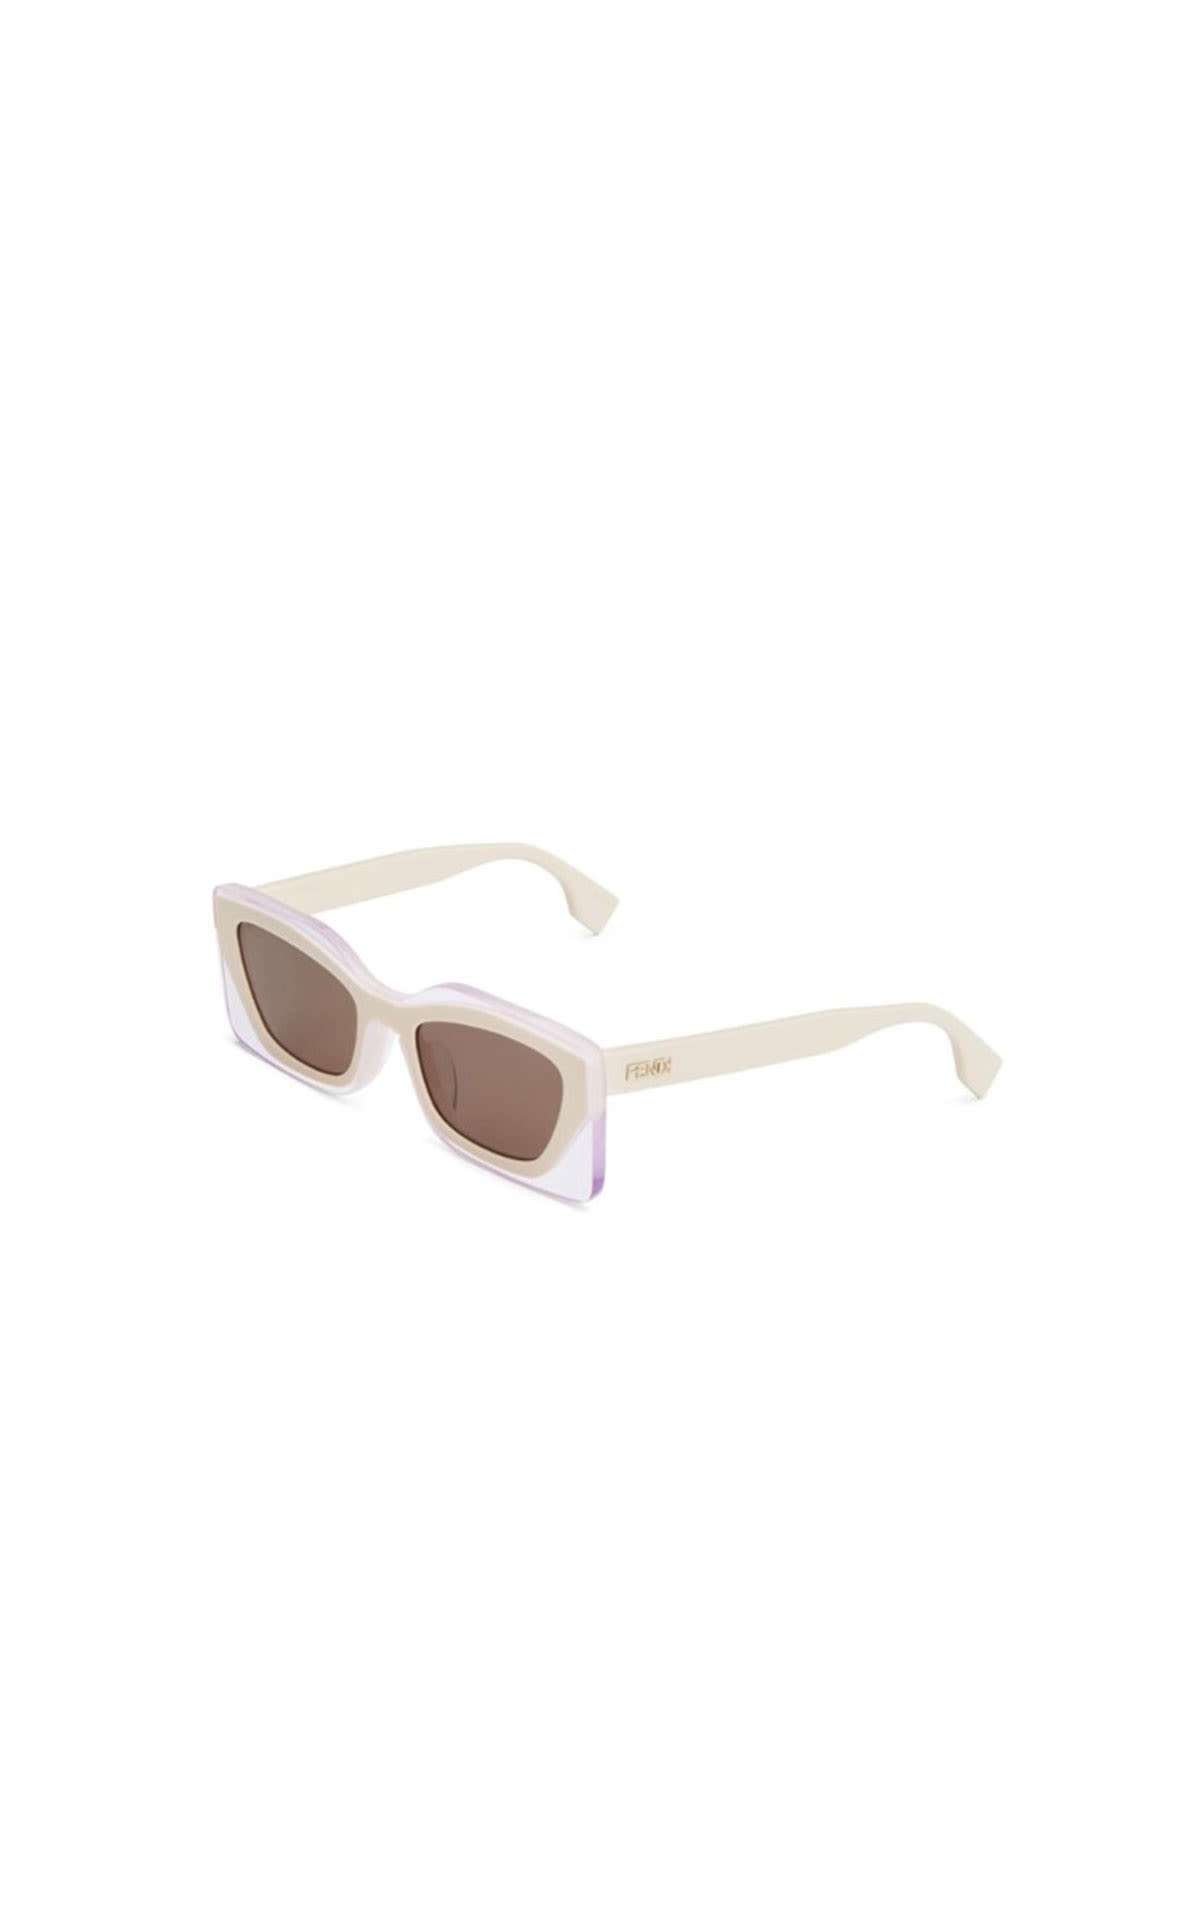 Fendi Fendi Feel sunglasses from Bicester Village